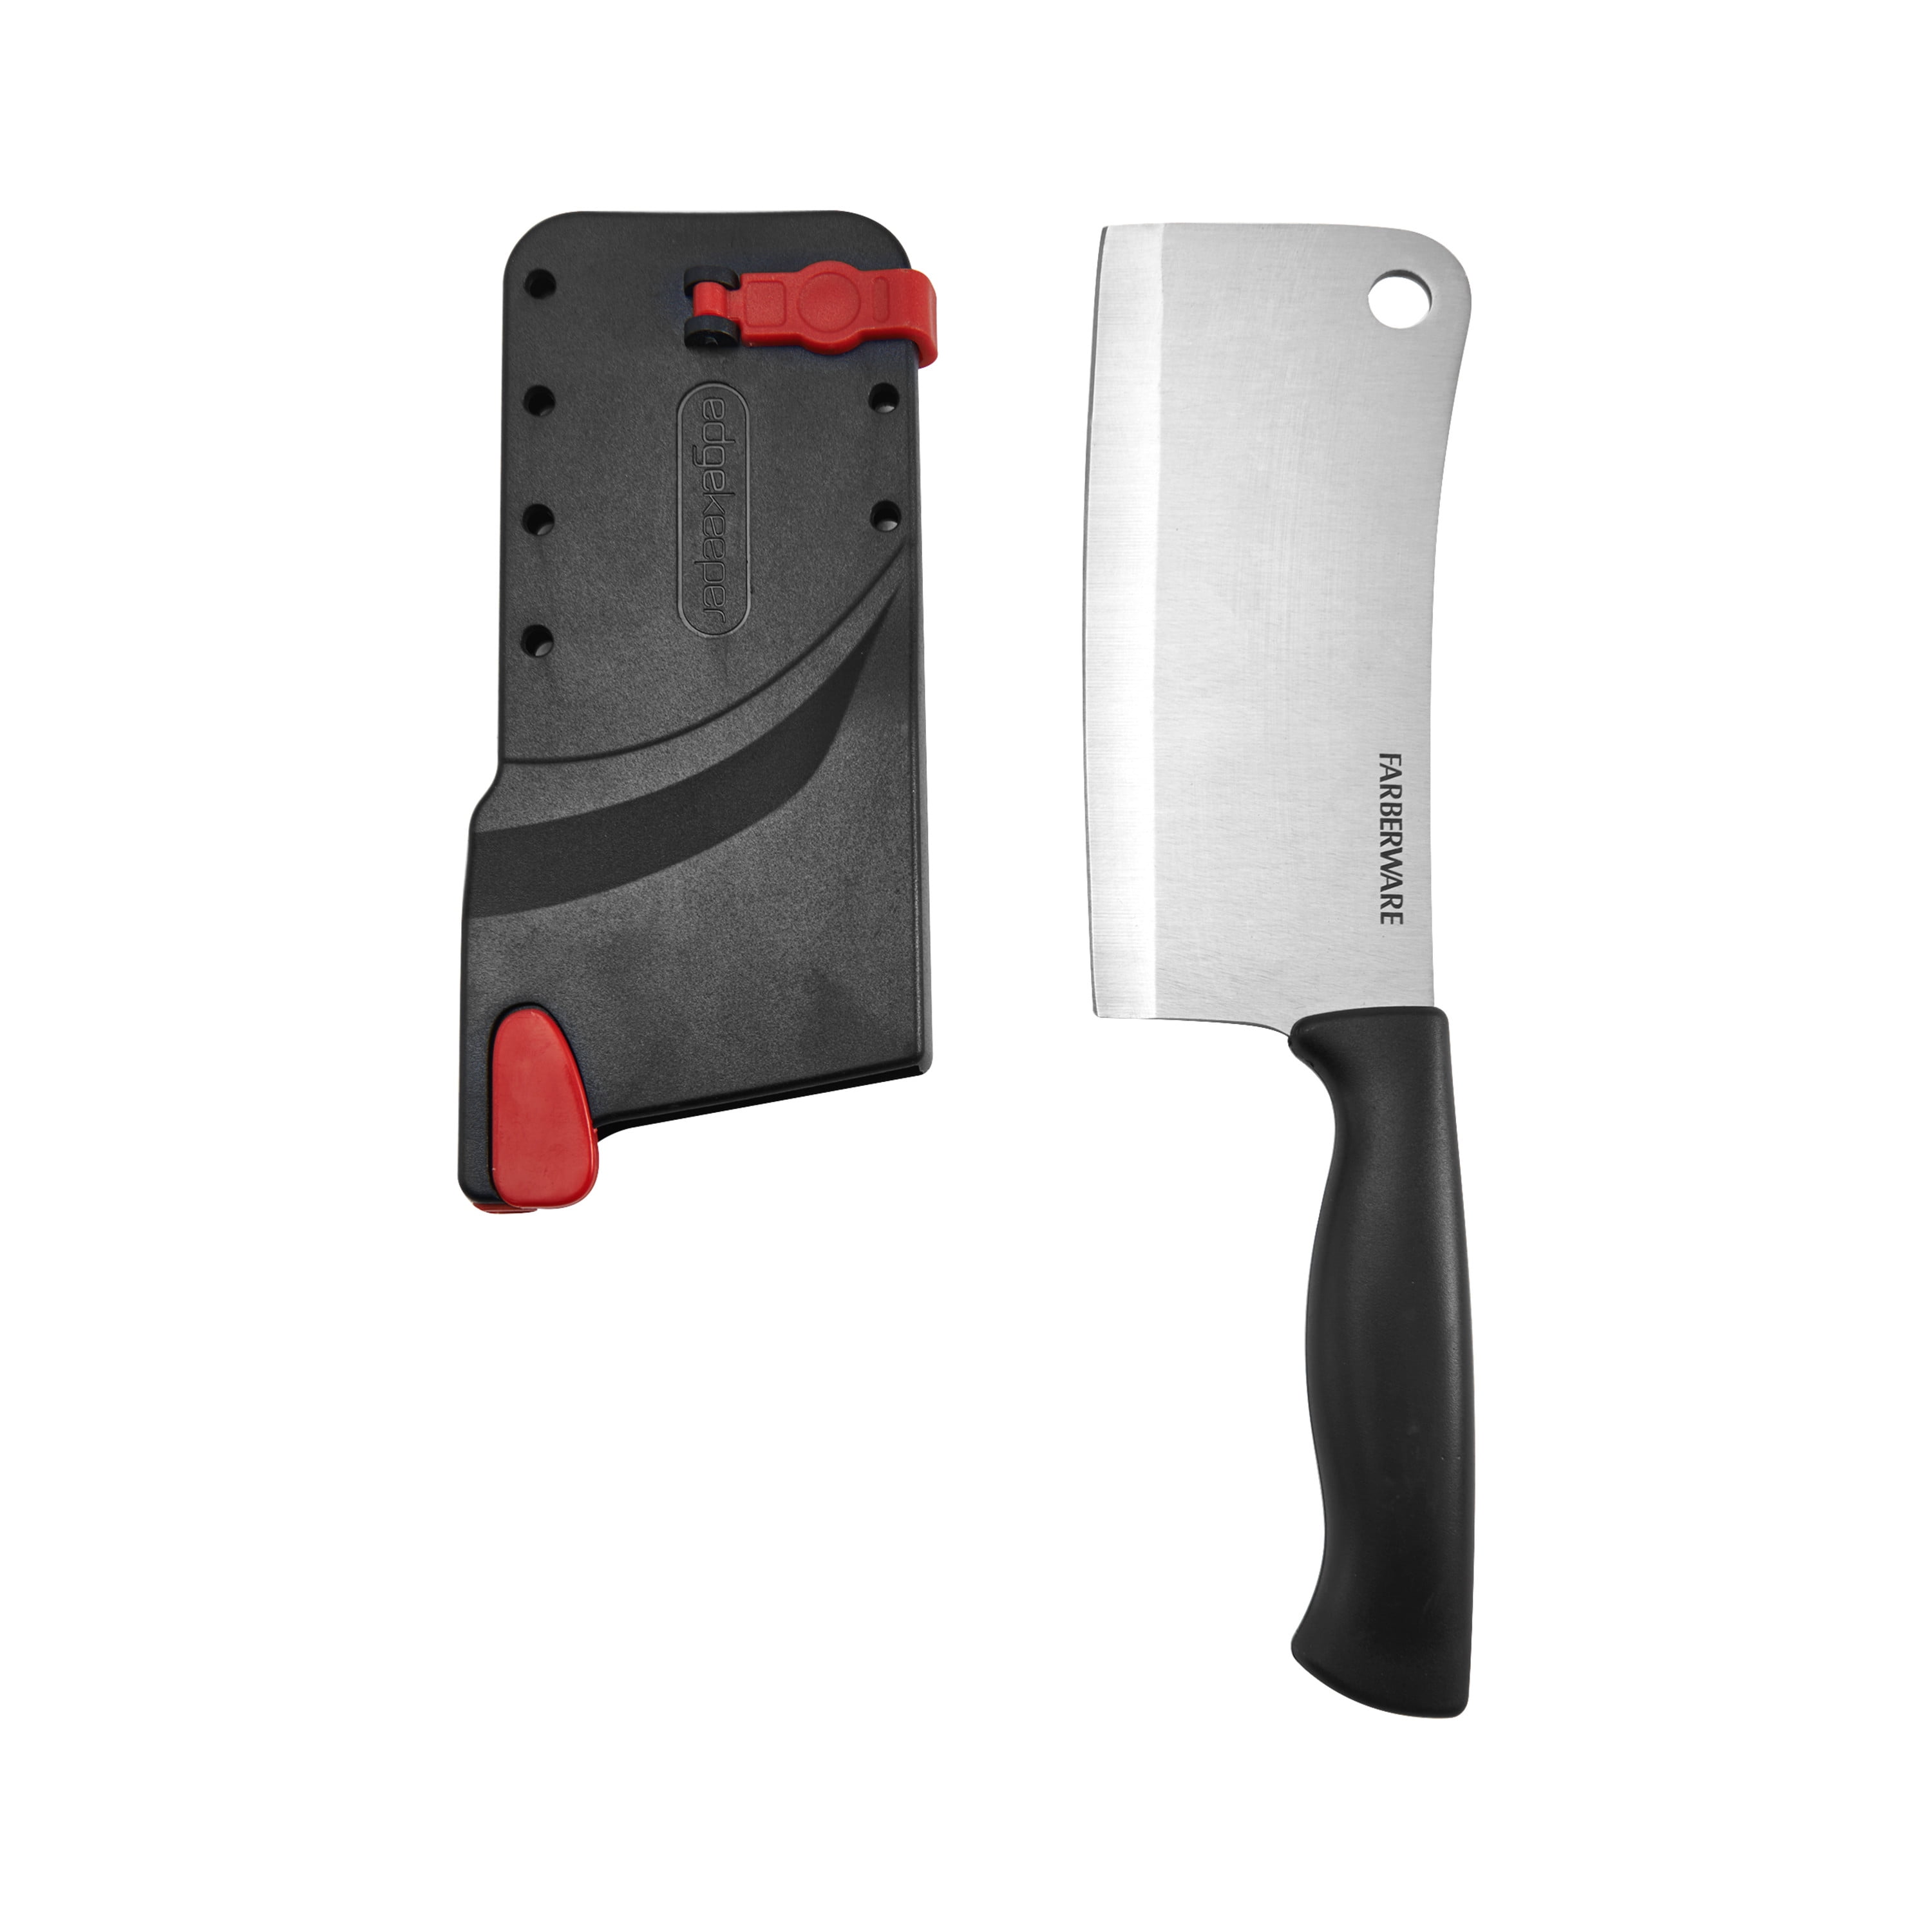 Farberware Edgekeeper Classic 6-inch Cleaver Knife with Black Self-Sharpening Sleeve and Handle